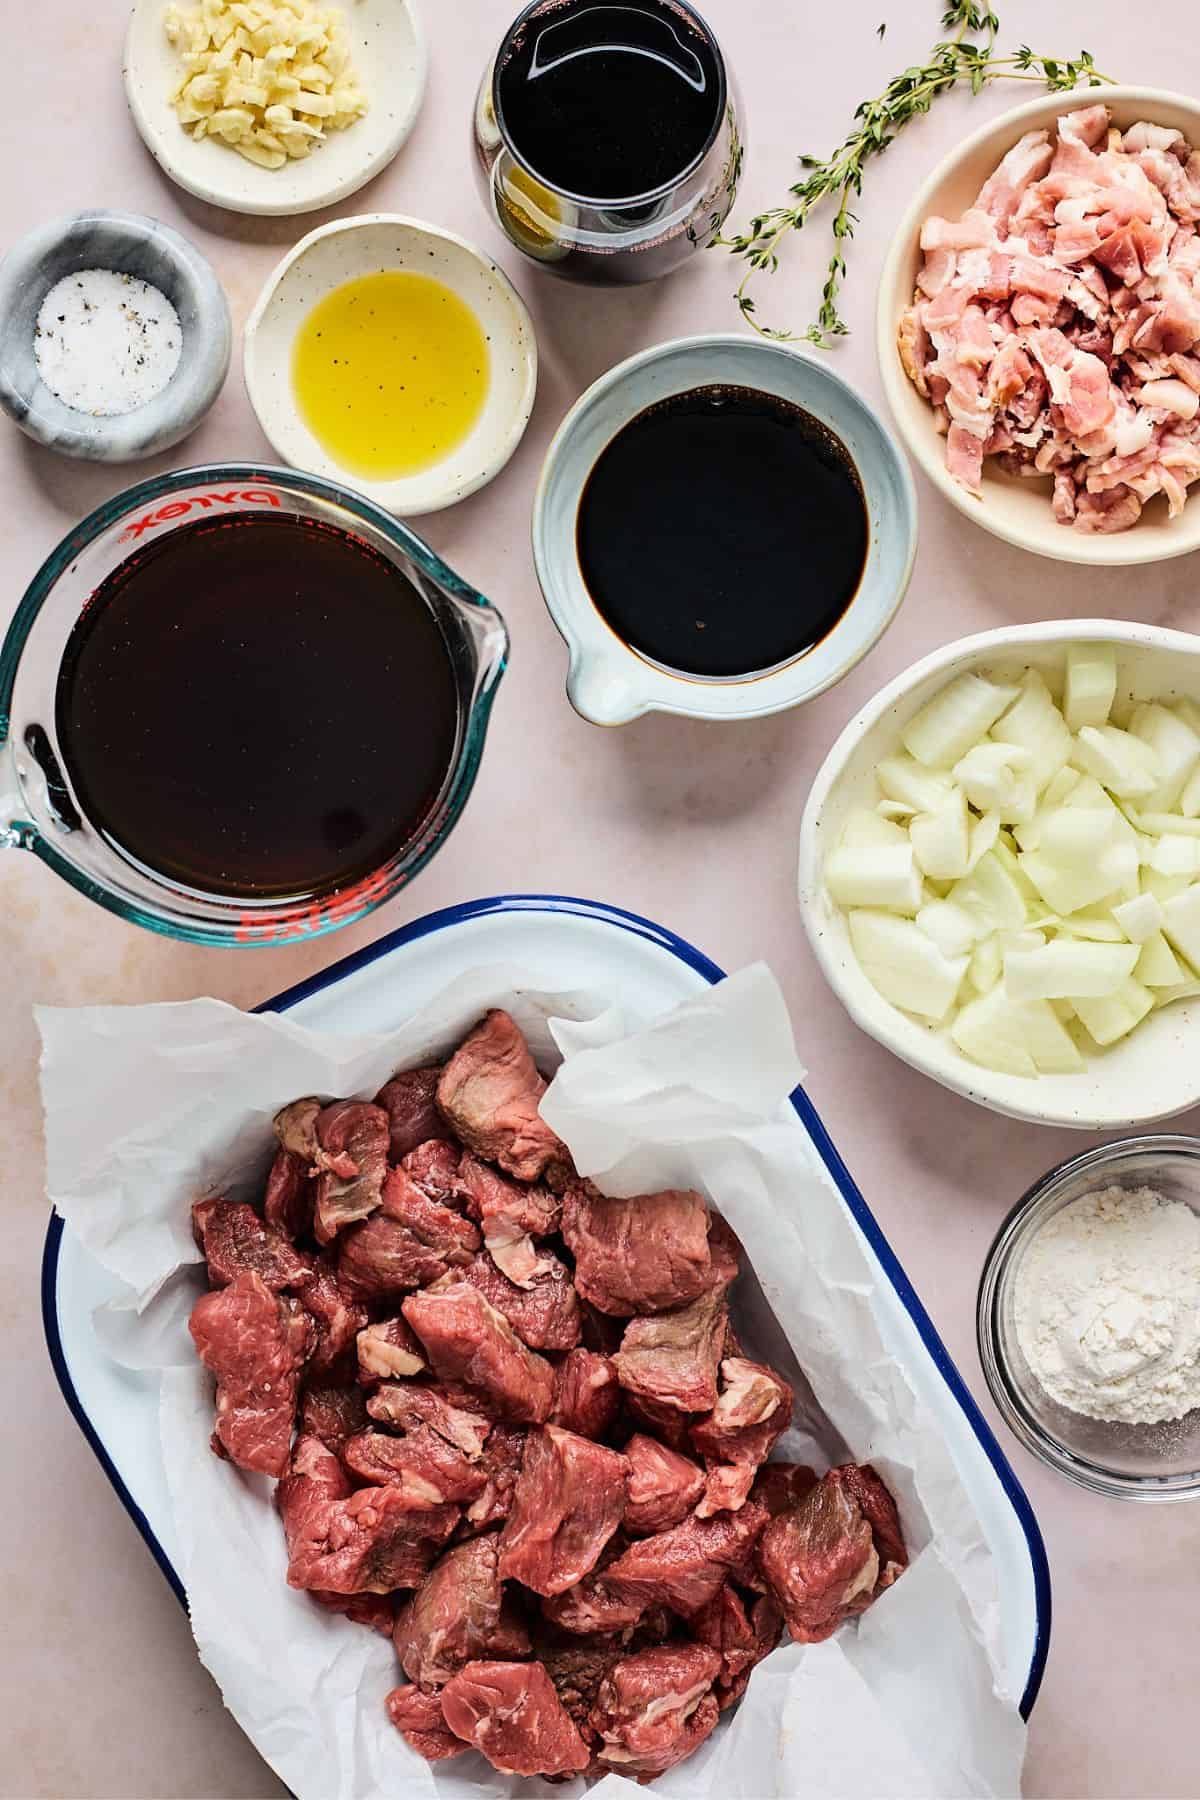 Ingredients to make beef tips